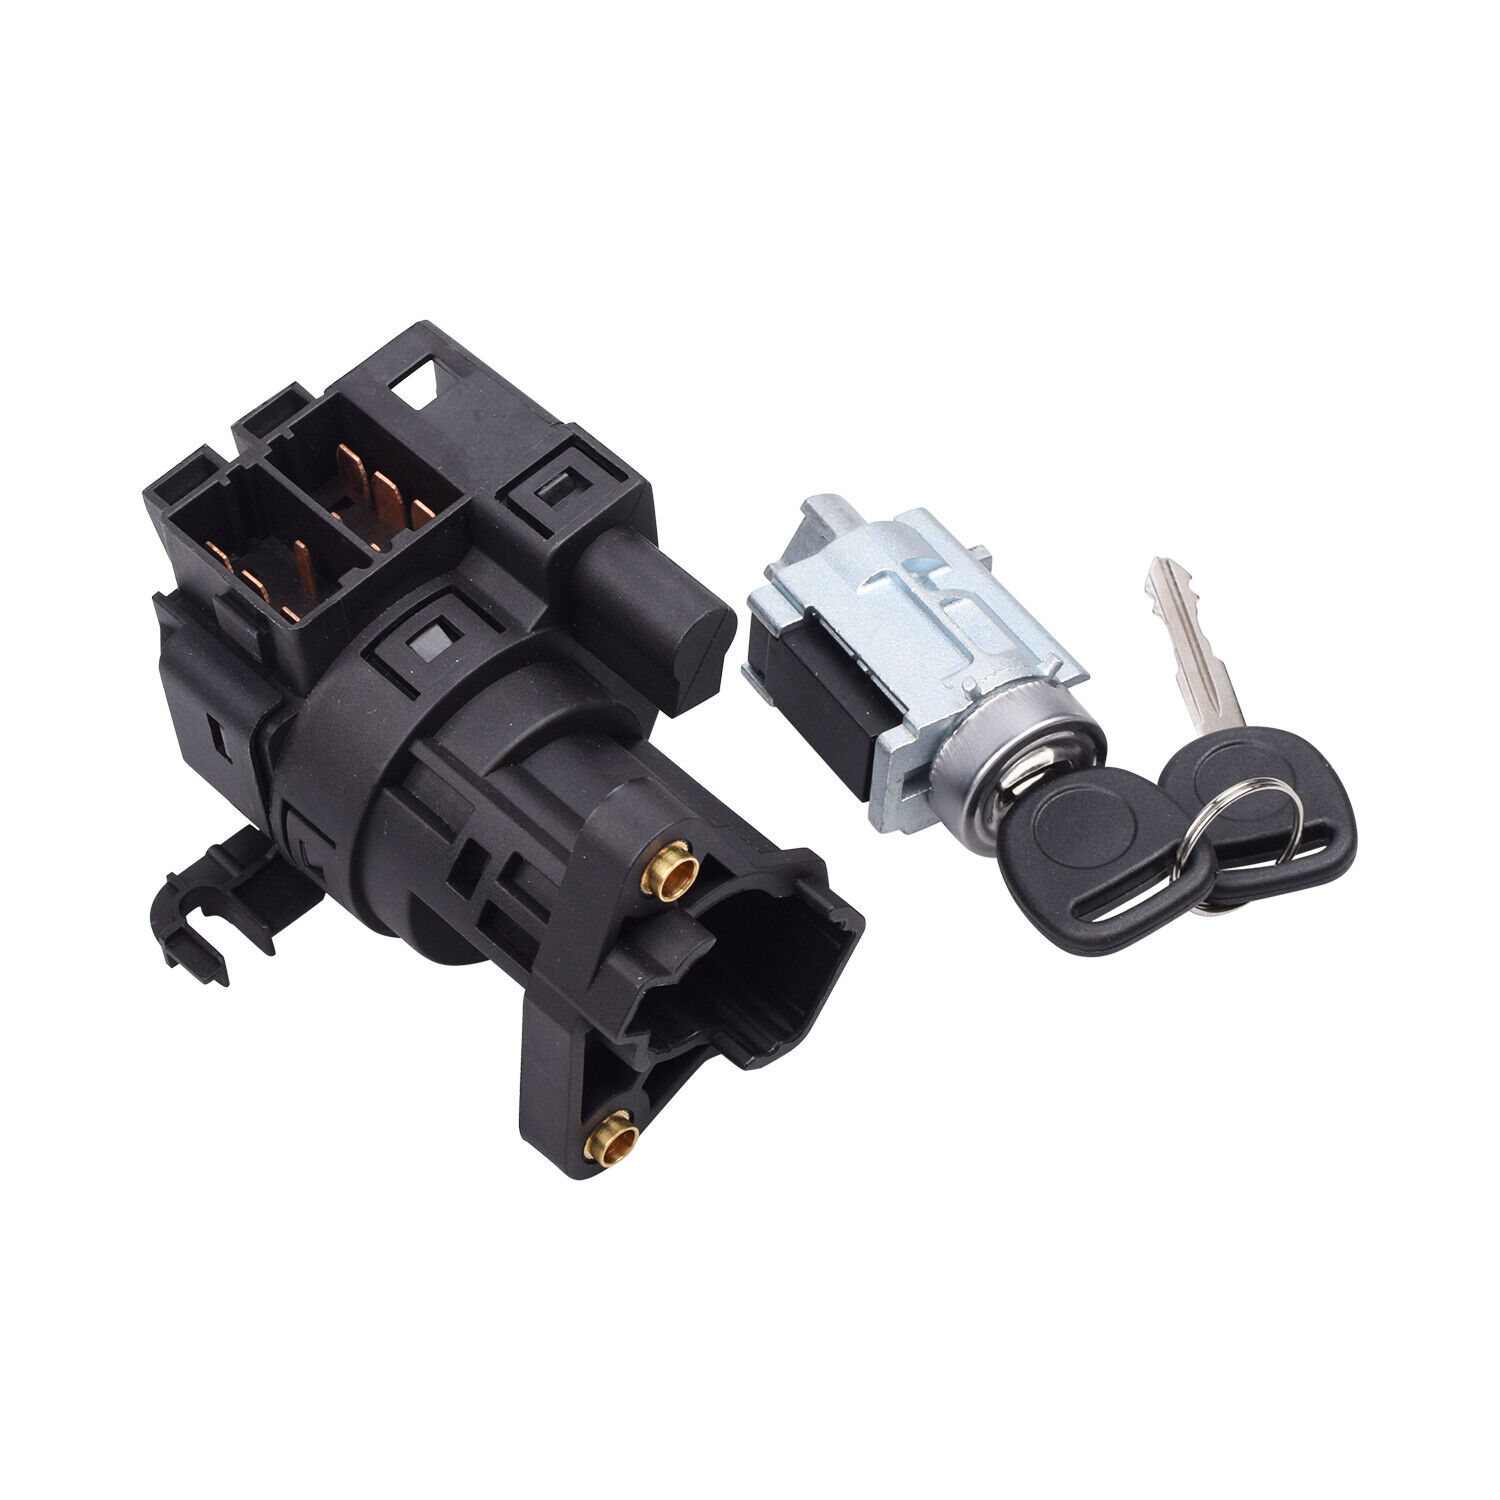 For Chevy Impala 3.4L 3.8L 2000-05 Ignition Starter Switch Lock Cylinder w/ Keys